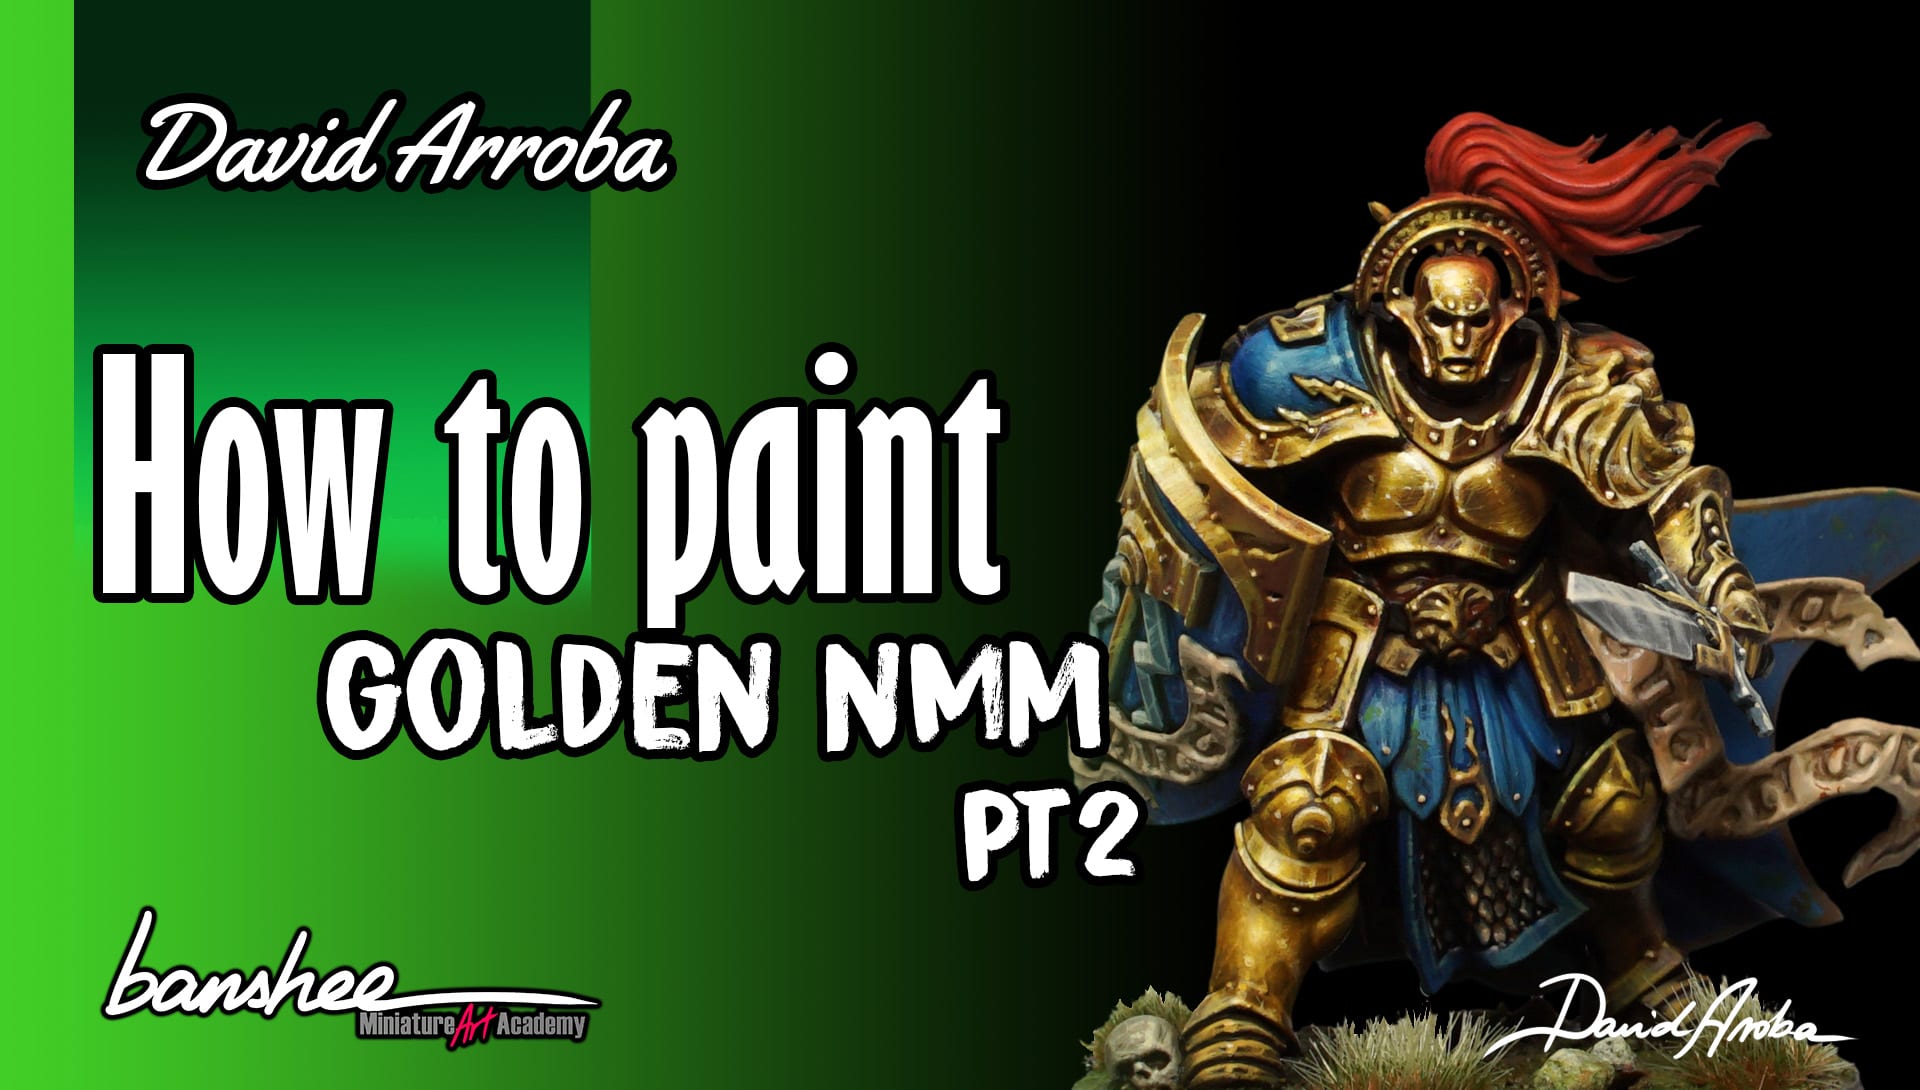 Painting Golden NMM - Banshee